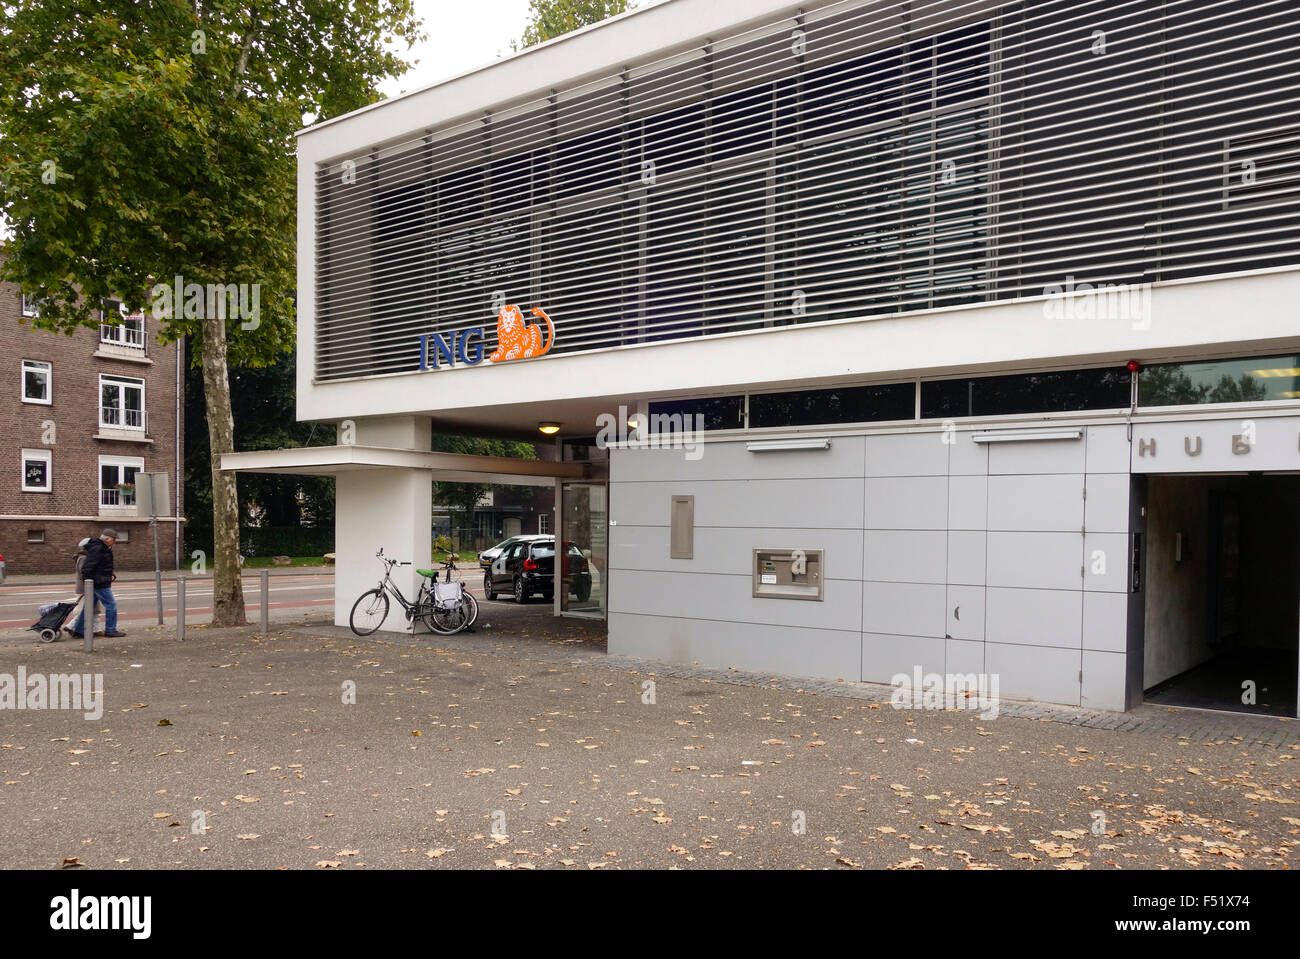 Dutch ING bank branch building at entrance, Sittard, Netherlands. Stock Photo